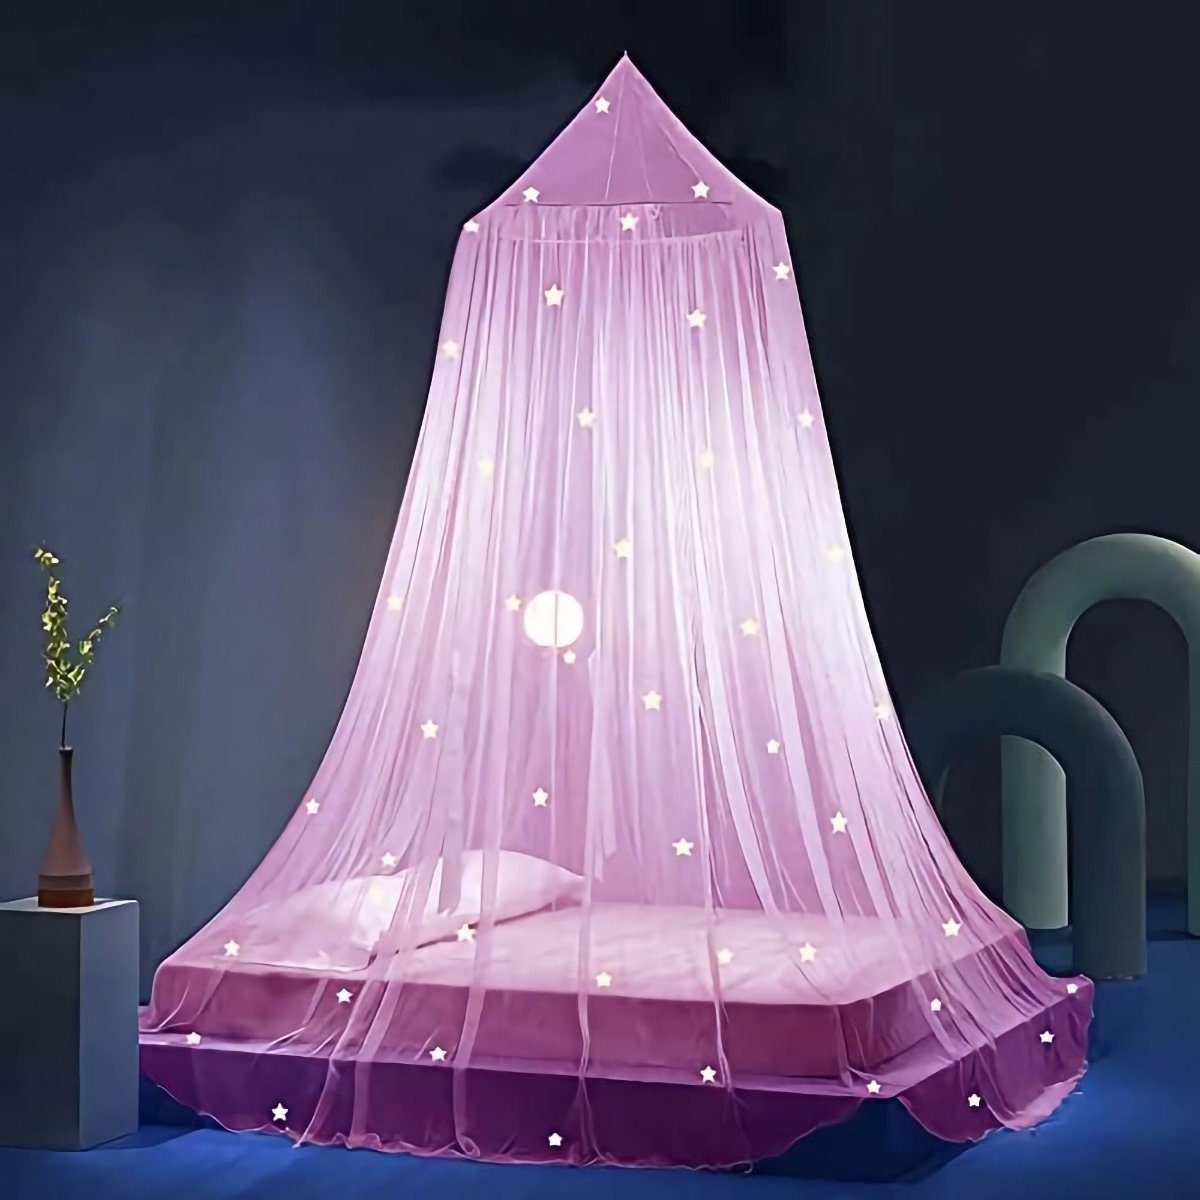 yozhiqu Moskitonetz Stern-Bettdecke leuchtend, kuppelförmige Bettdecke, Moskitonetz, faltbare Mädchen-Schlafzimmer-Dekoration, Prinzessin-Bettdecke